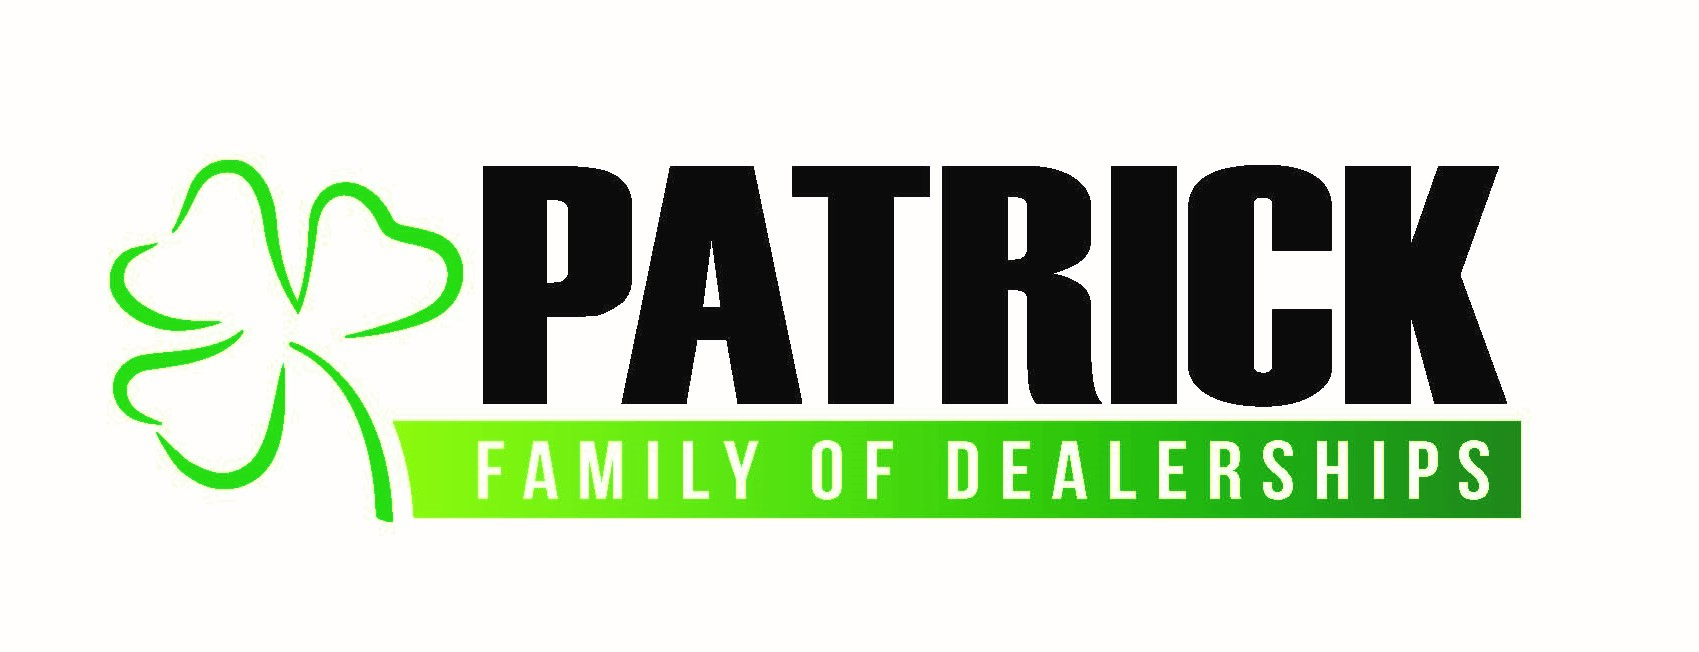 Patrick Auto Group